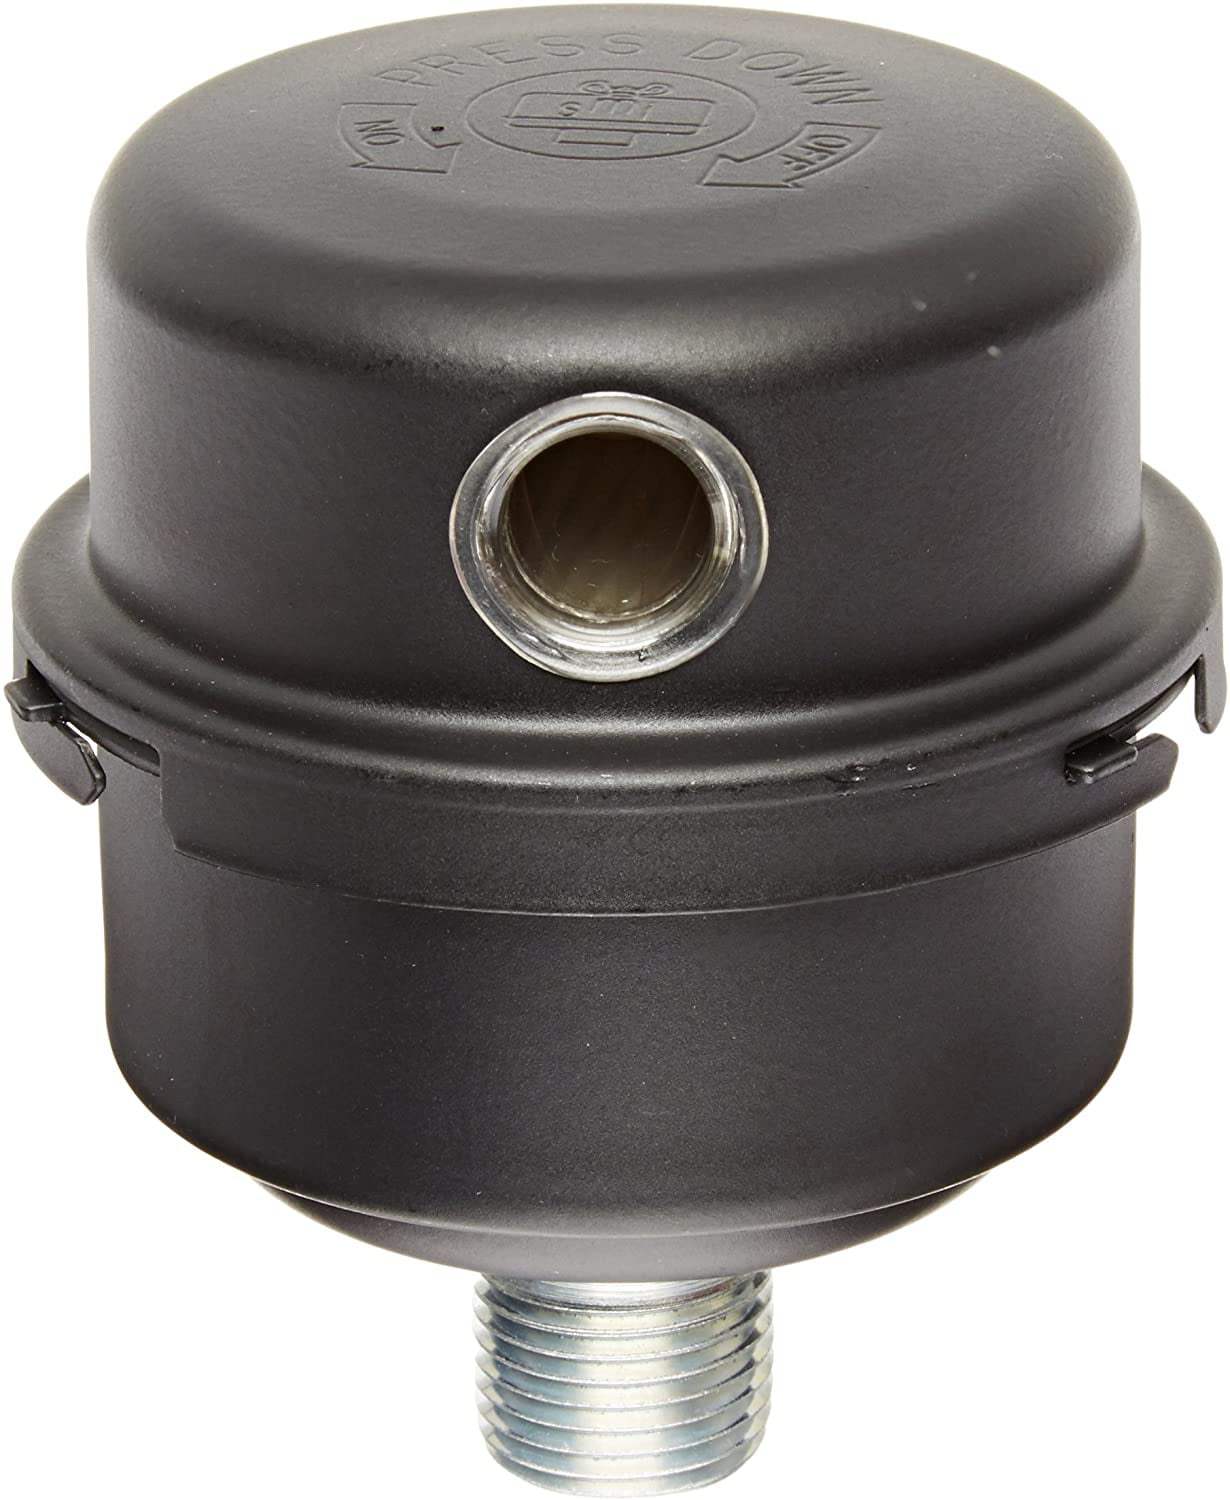 1/2"PT Thread Connector Muffler Filter Silencer for Oil-less Air Compressor FS 